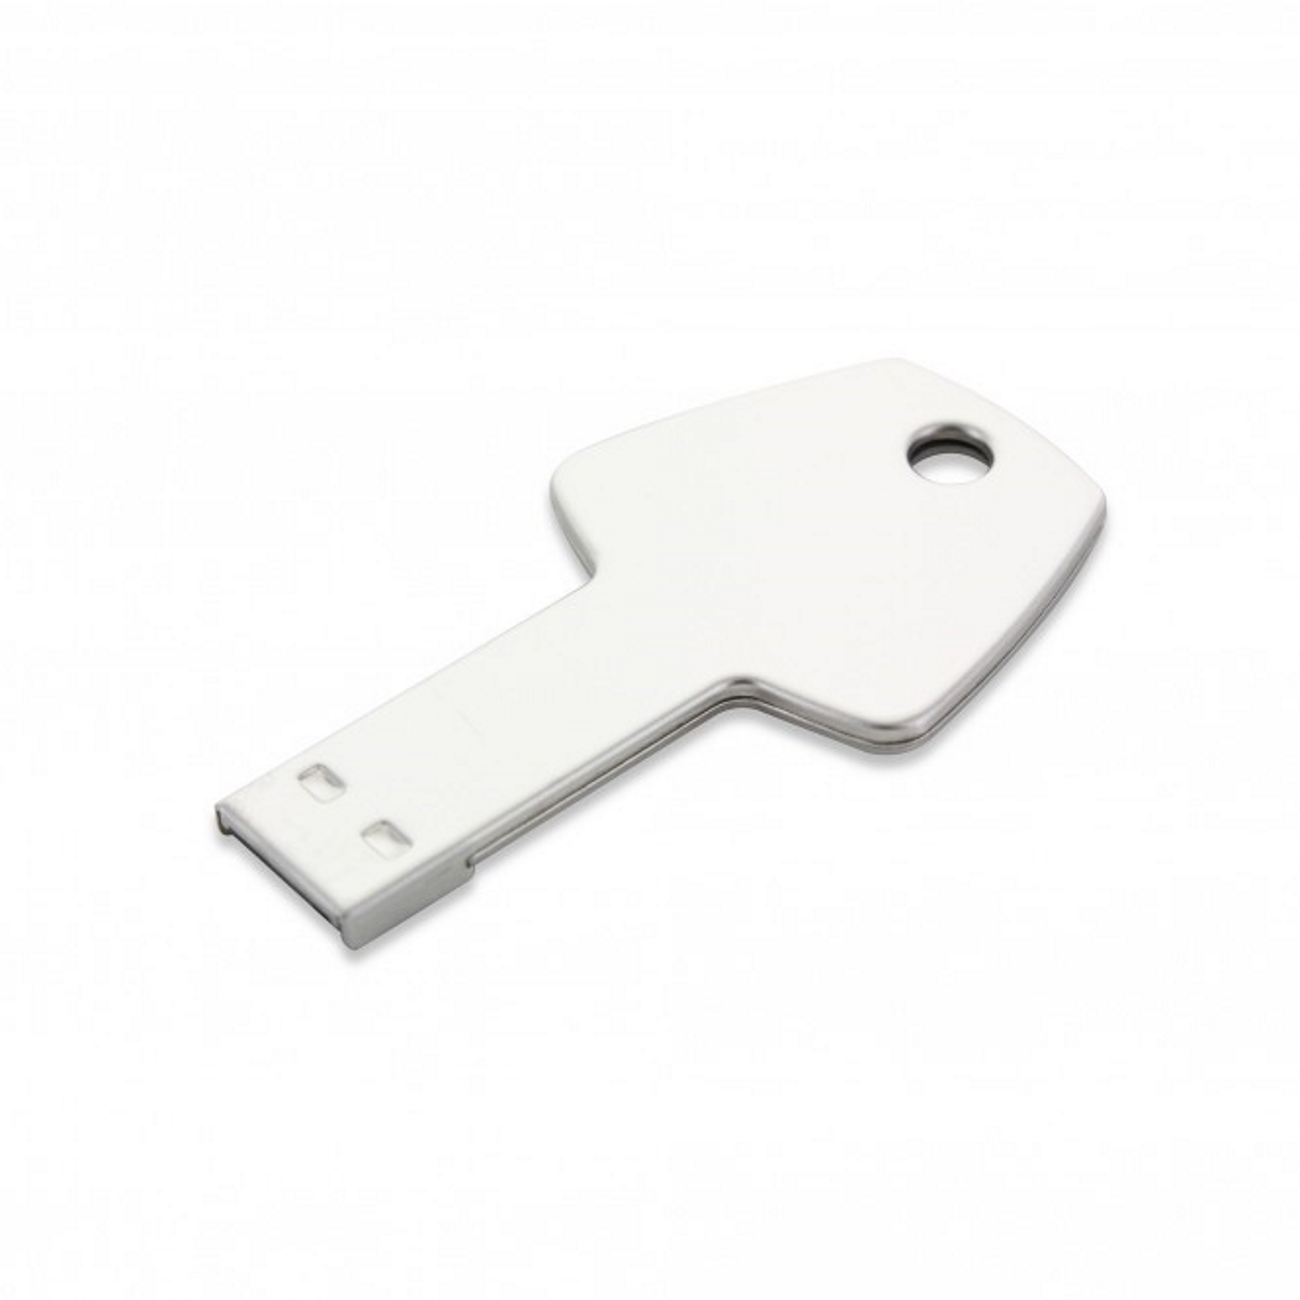 USB GERMANY ®Schlüssel Key USB-Stick (Silber, 128 GB)